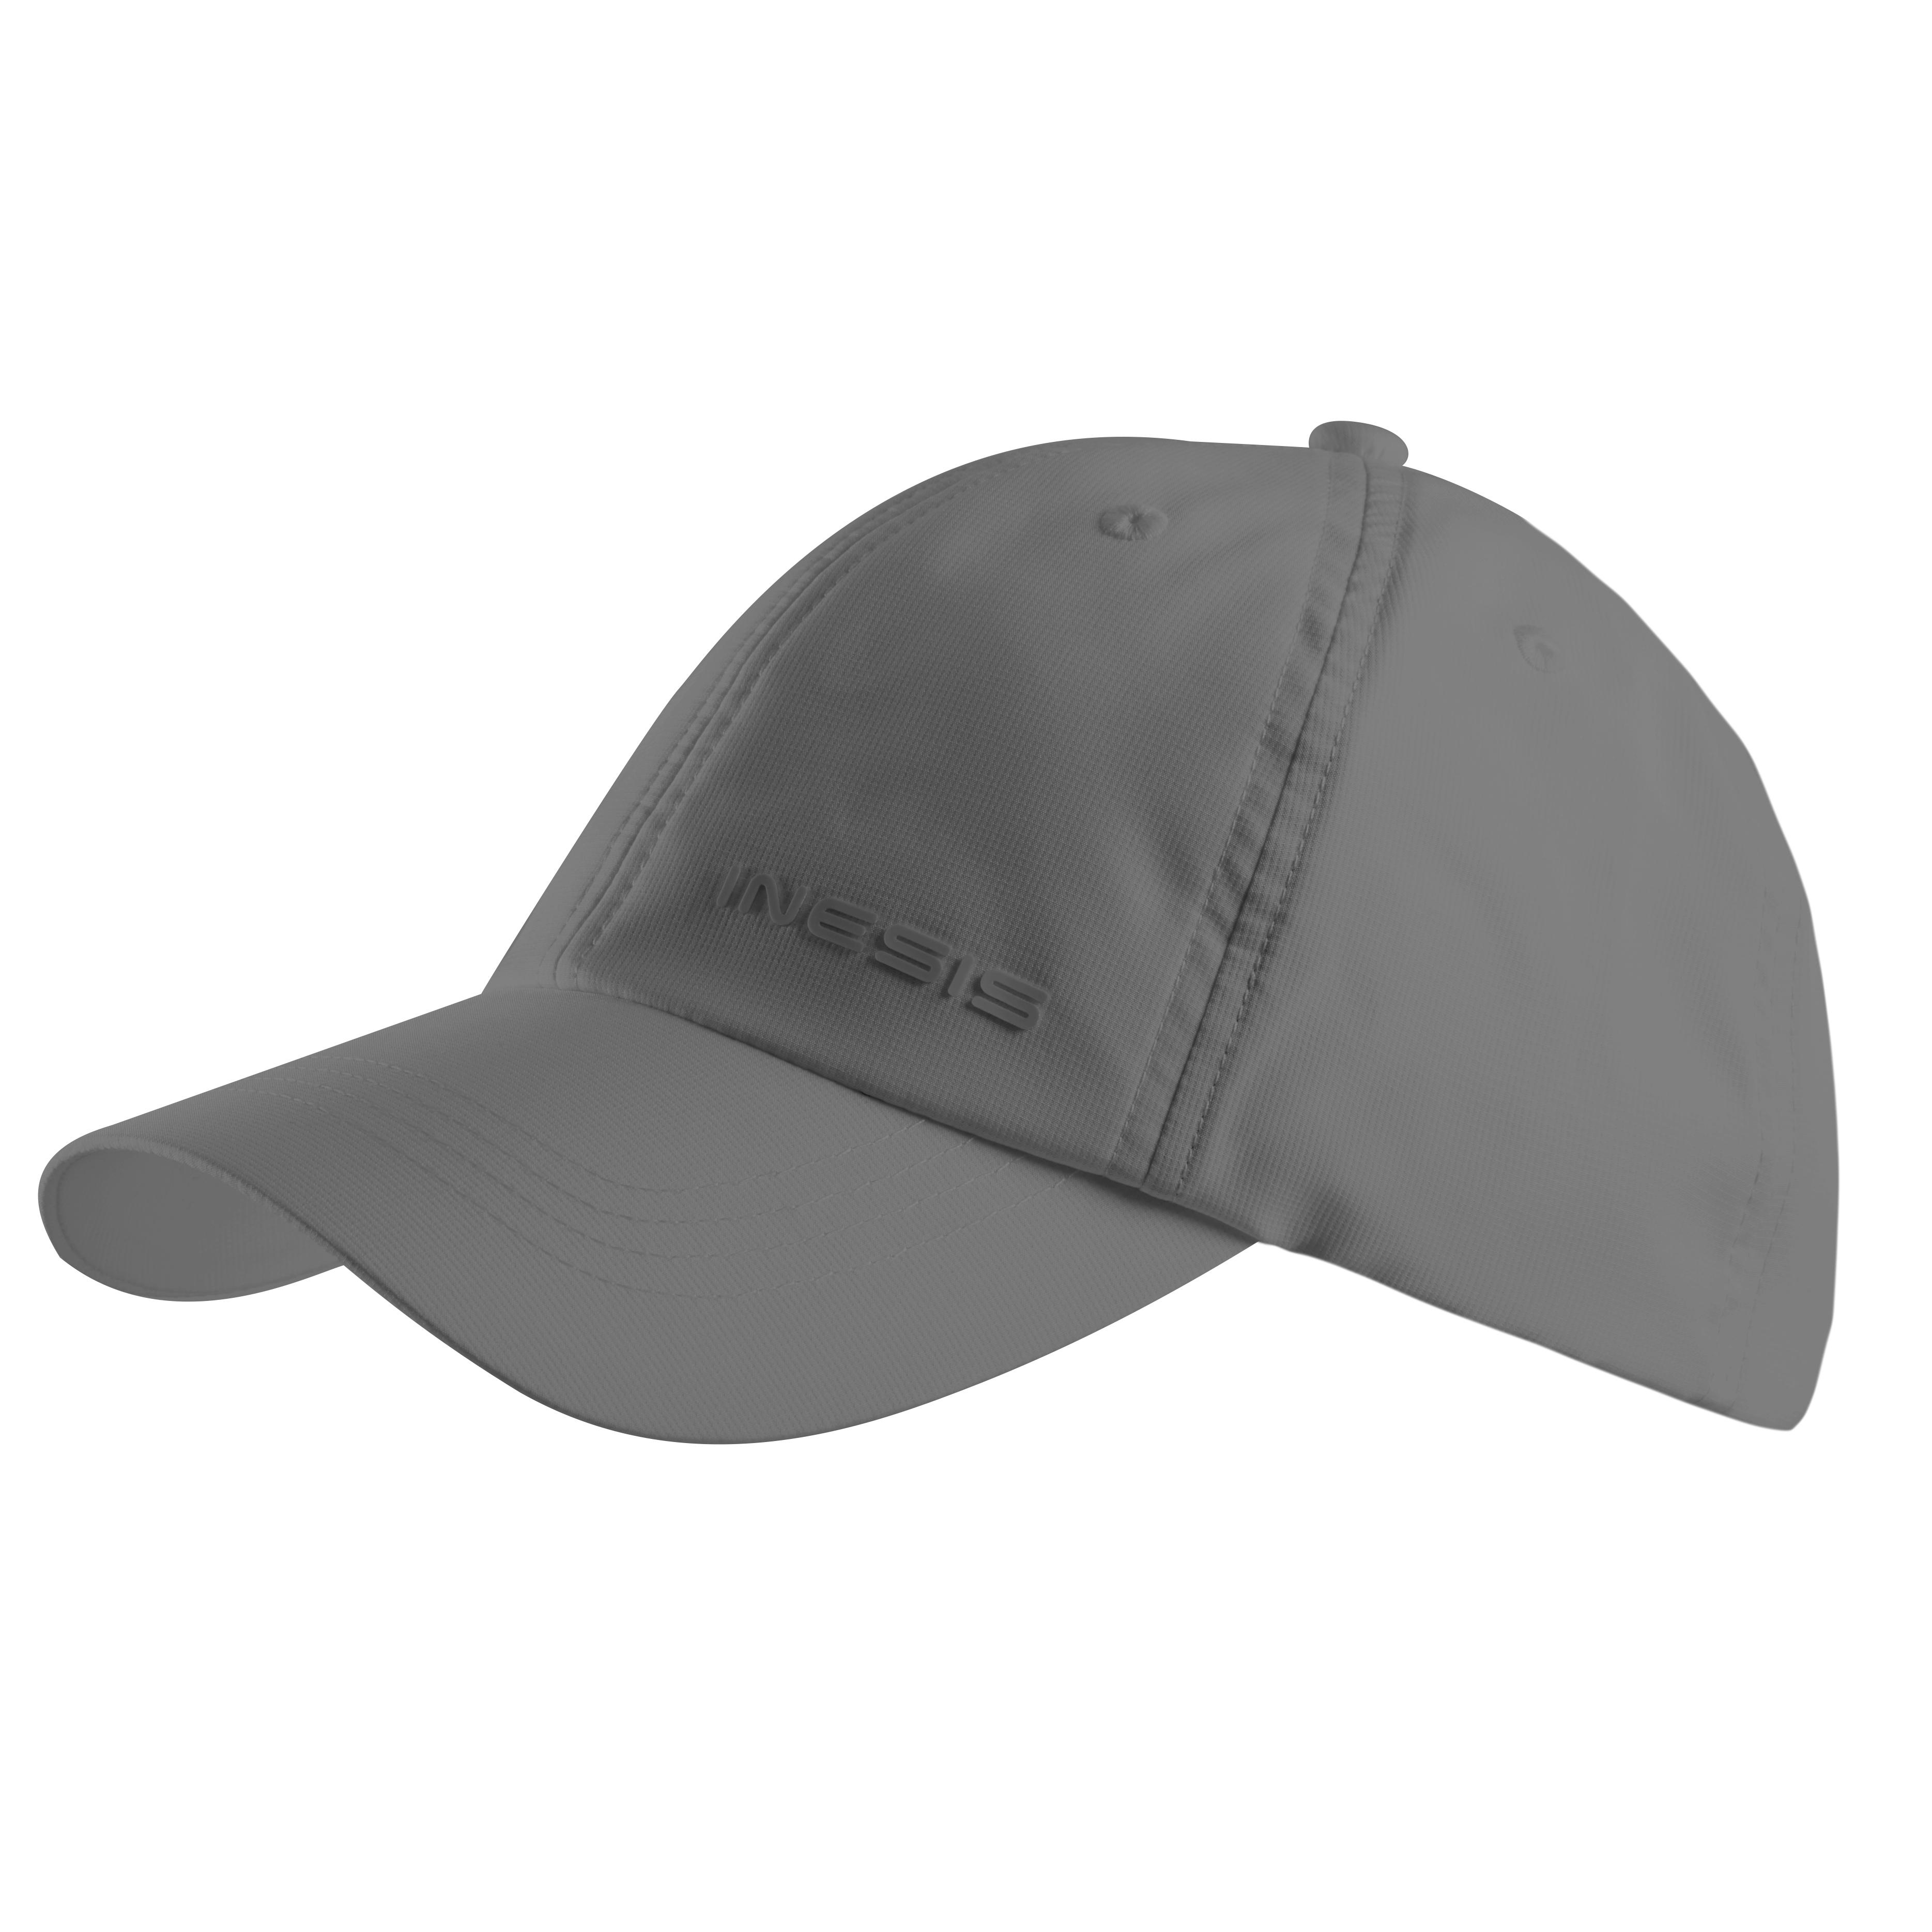 Golf Cap - WW 500 Dark Grey - INESIS